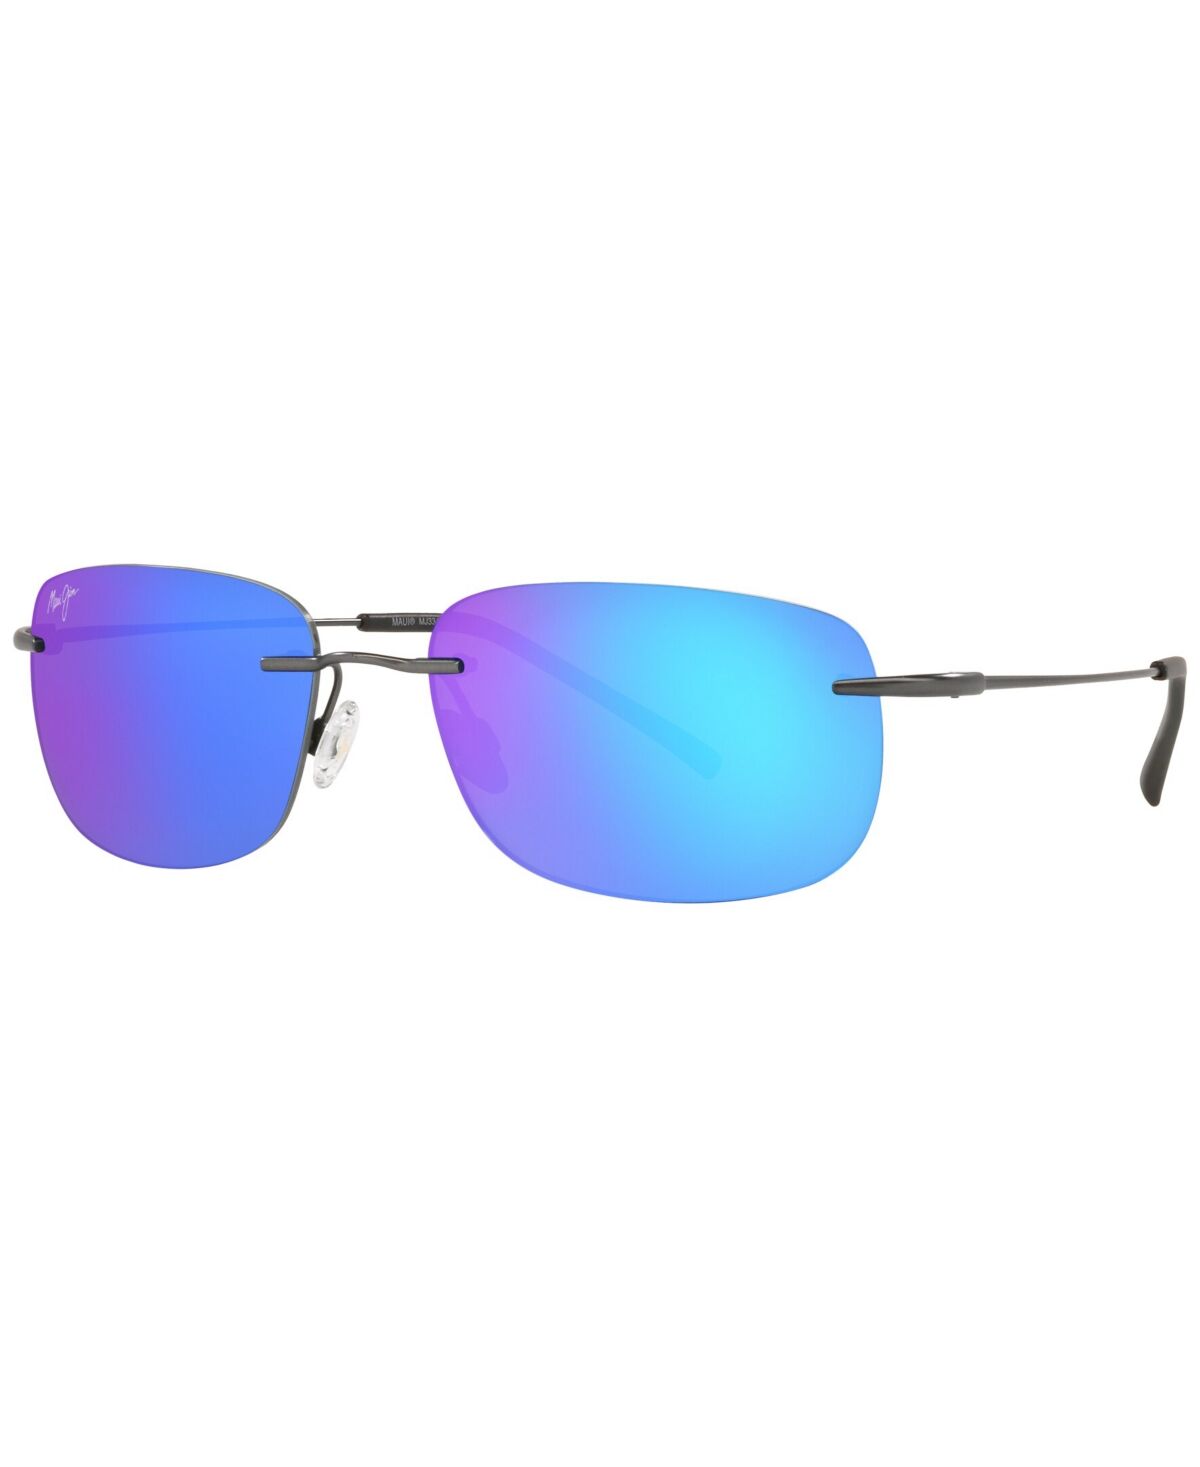 Maui Jim Unisex Polarized Sunglasses, MJ000670 Ohai 59 - Gunmetal